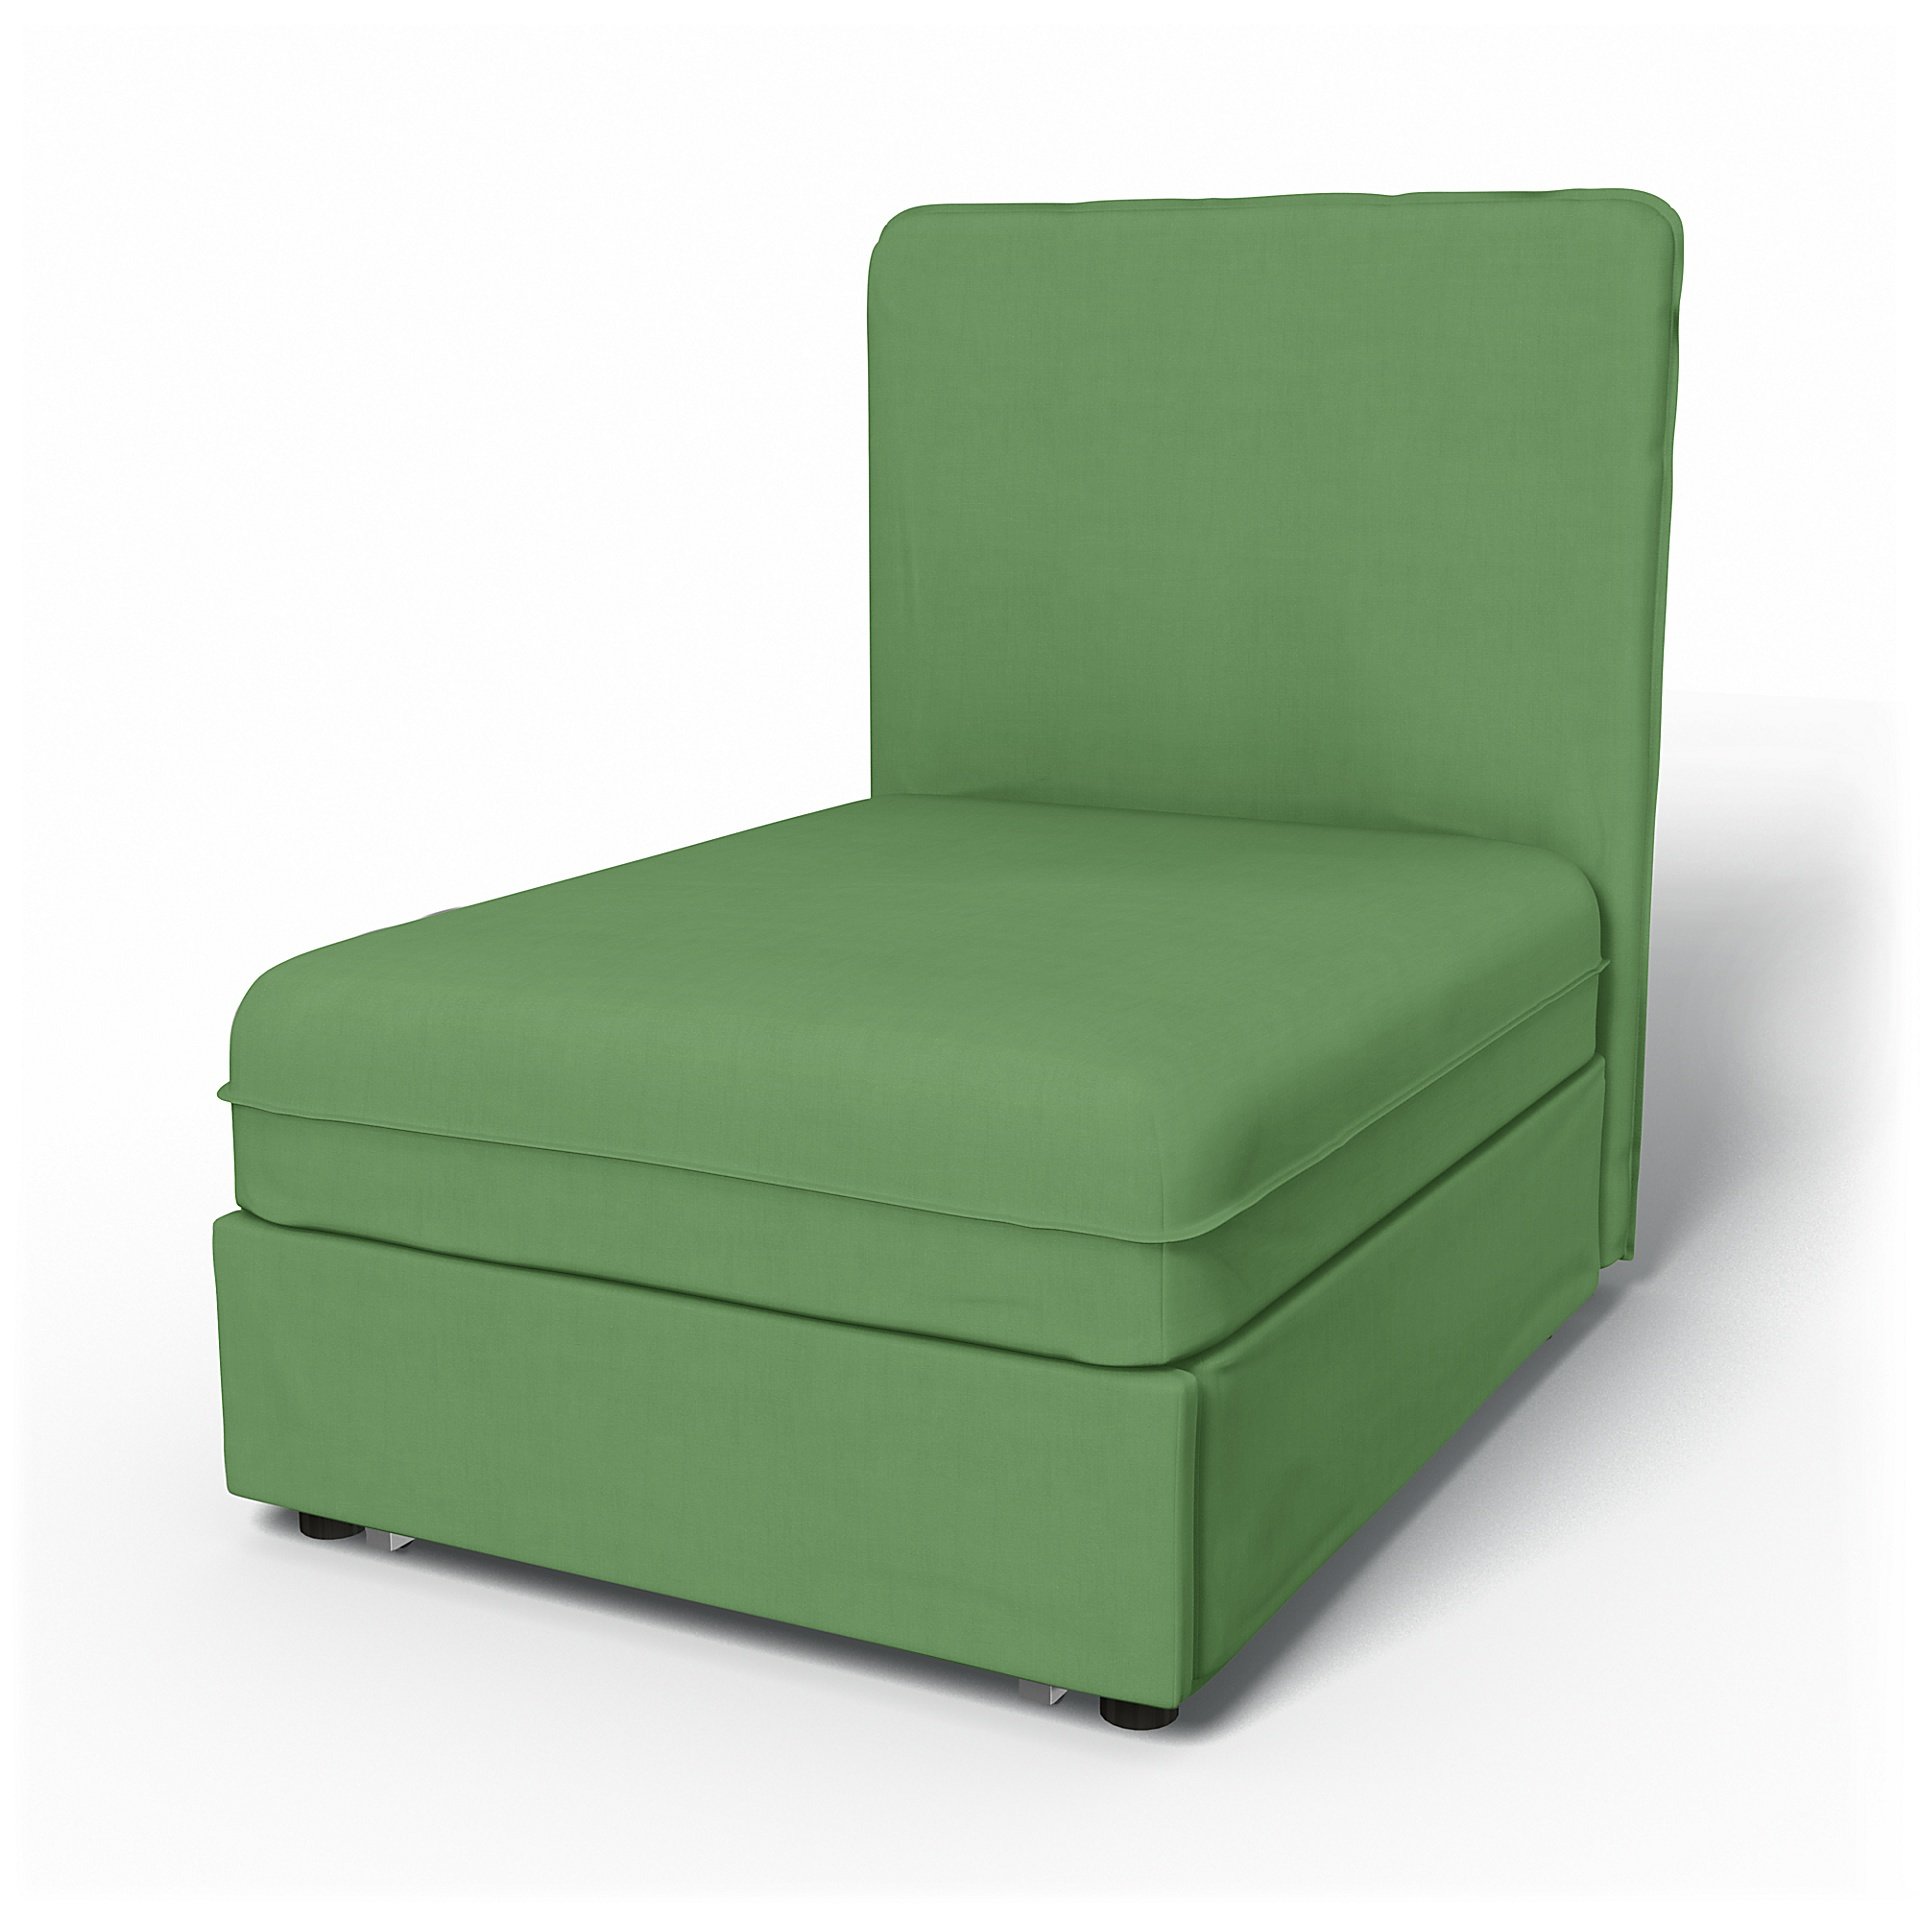 IKEA - Vallentuna Seat Module with High Back Sofa Bed Cover (80x100x46cm), Apple Green, Linen - Bemz